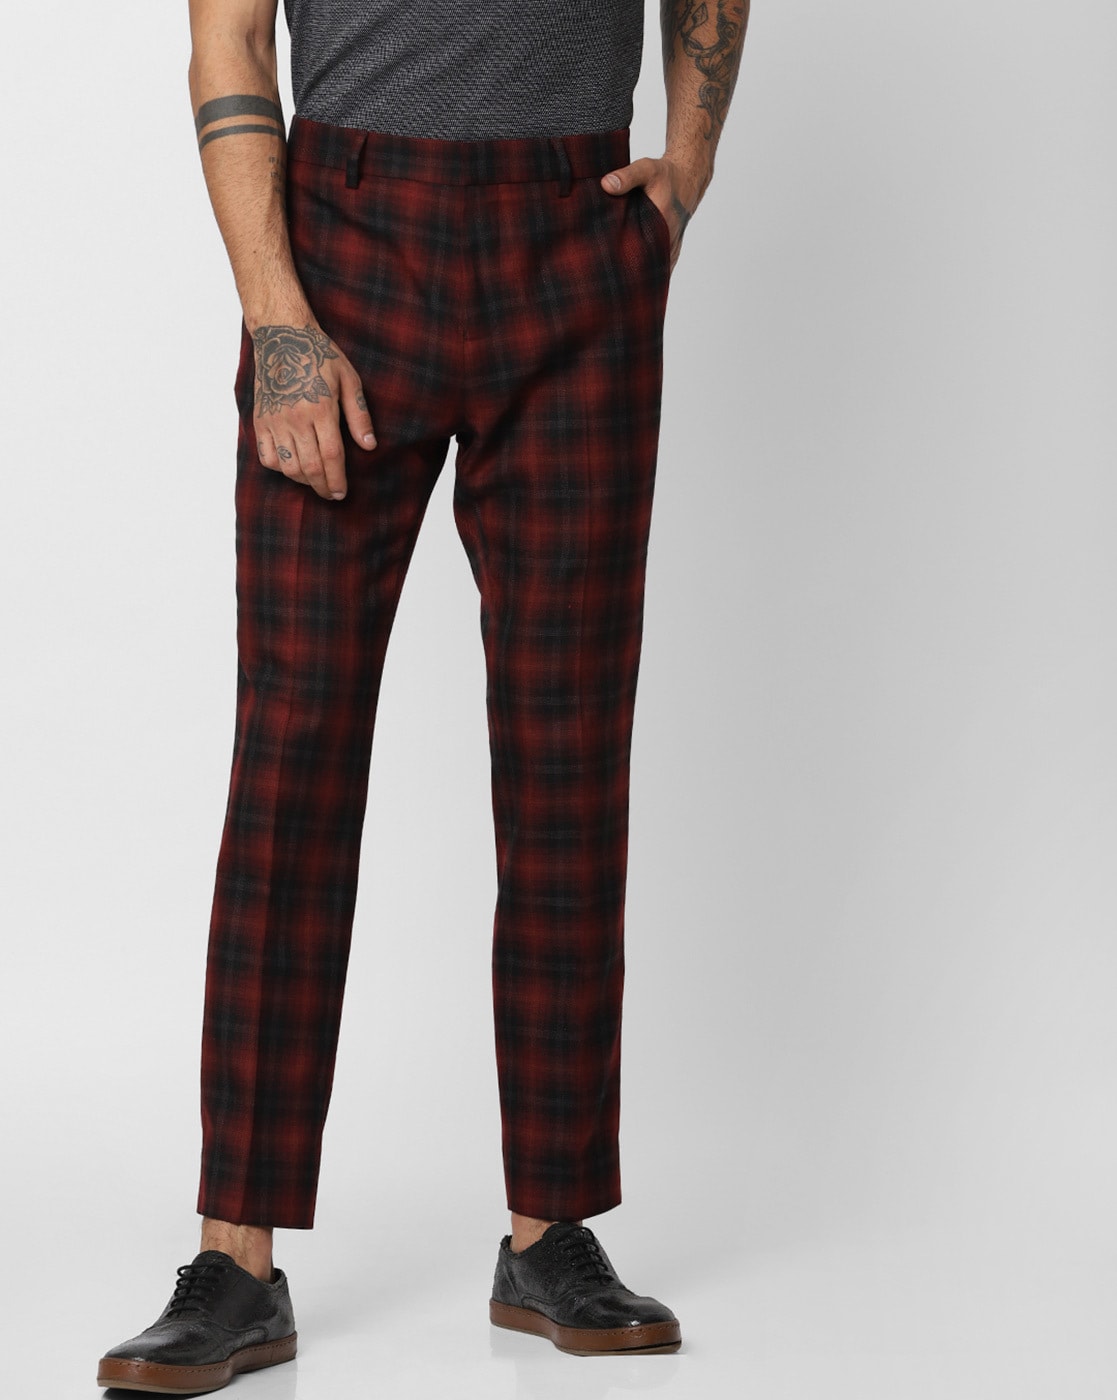 Jack  Jones Casual Trousers  Buy Jack  Jones Navy Blue Mid Rise Check  Trousers 28 OnlineNykaa fashion